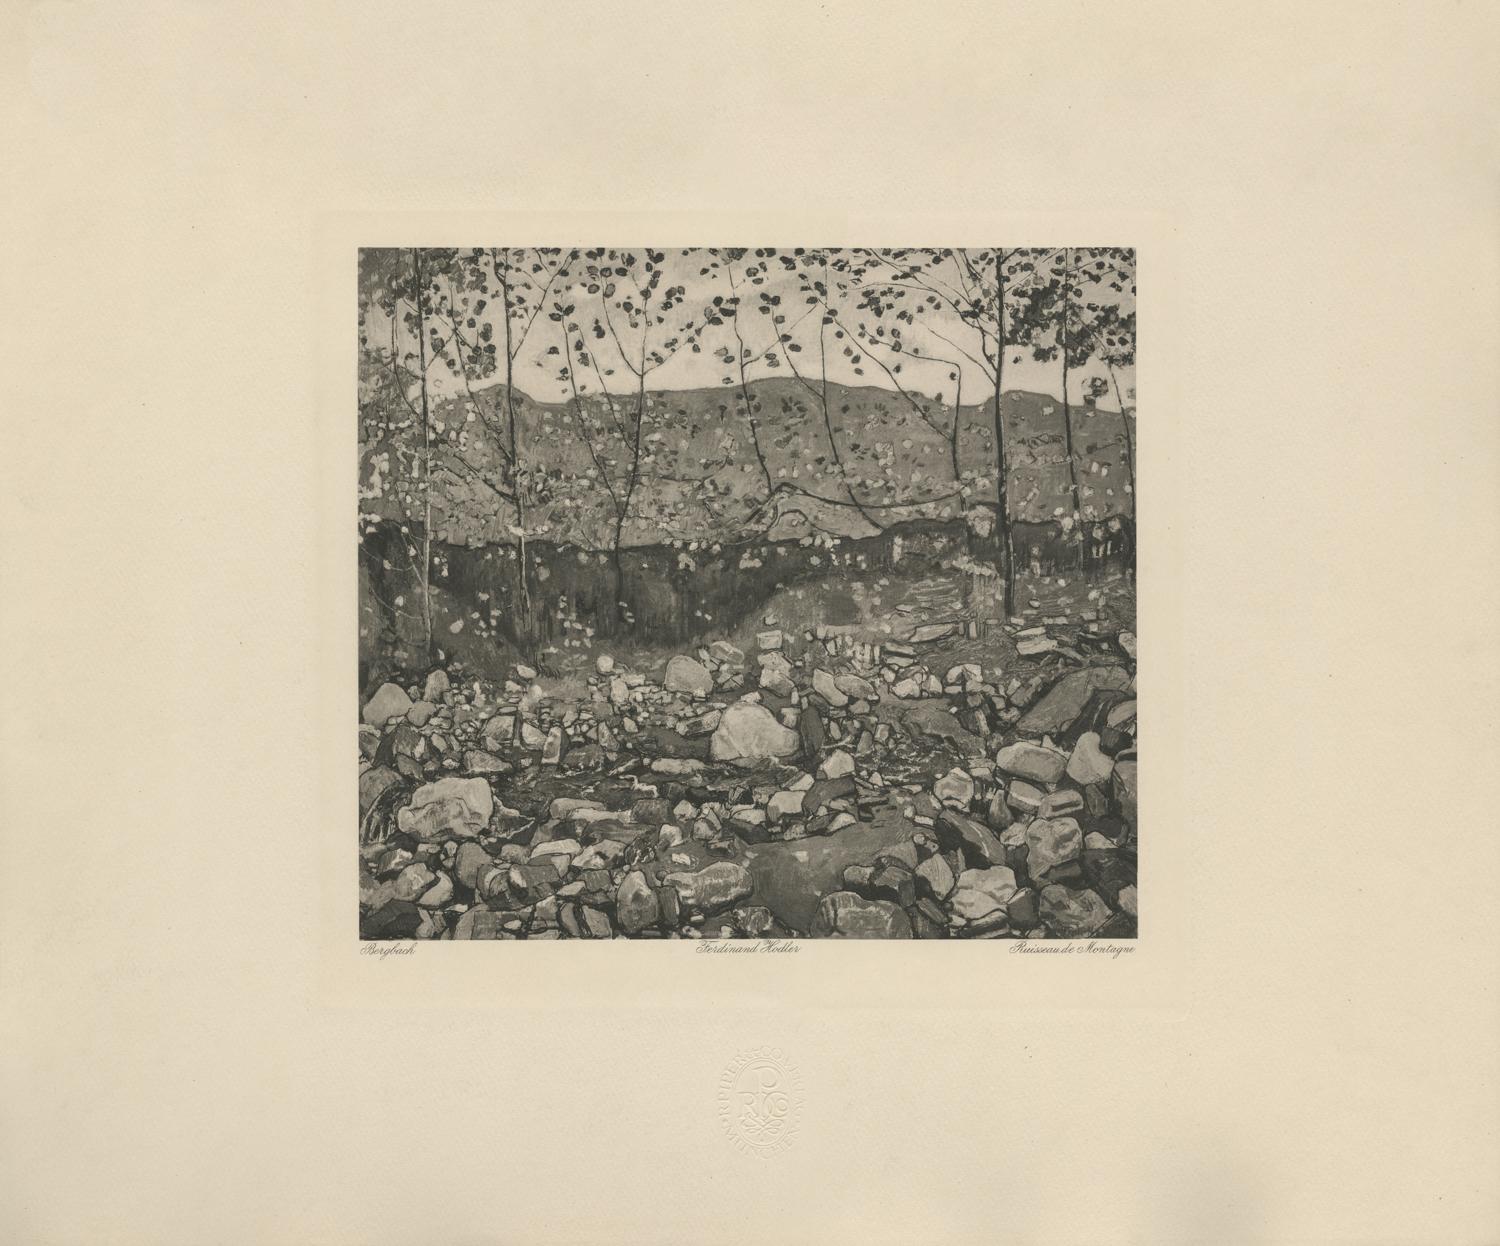 Ferdinand Hodler & R. Piper & Co. Figurative Print - "Mountain Stream" Copper Plate Heliogravure